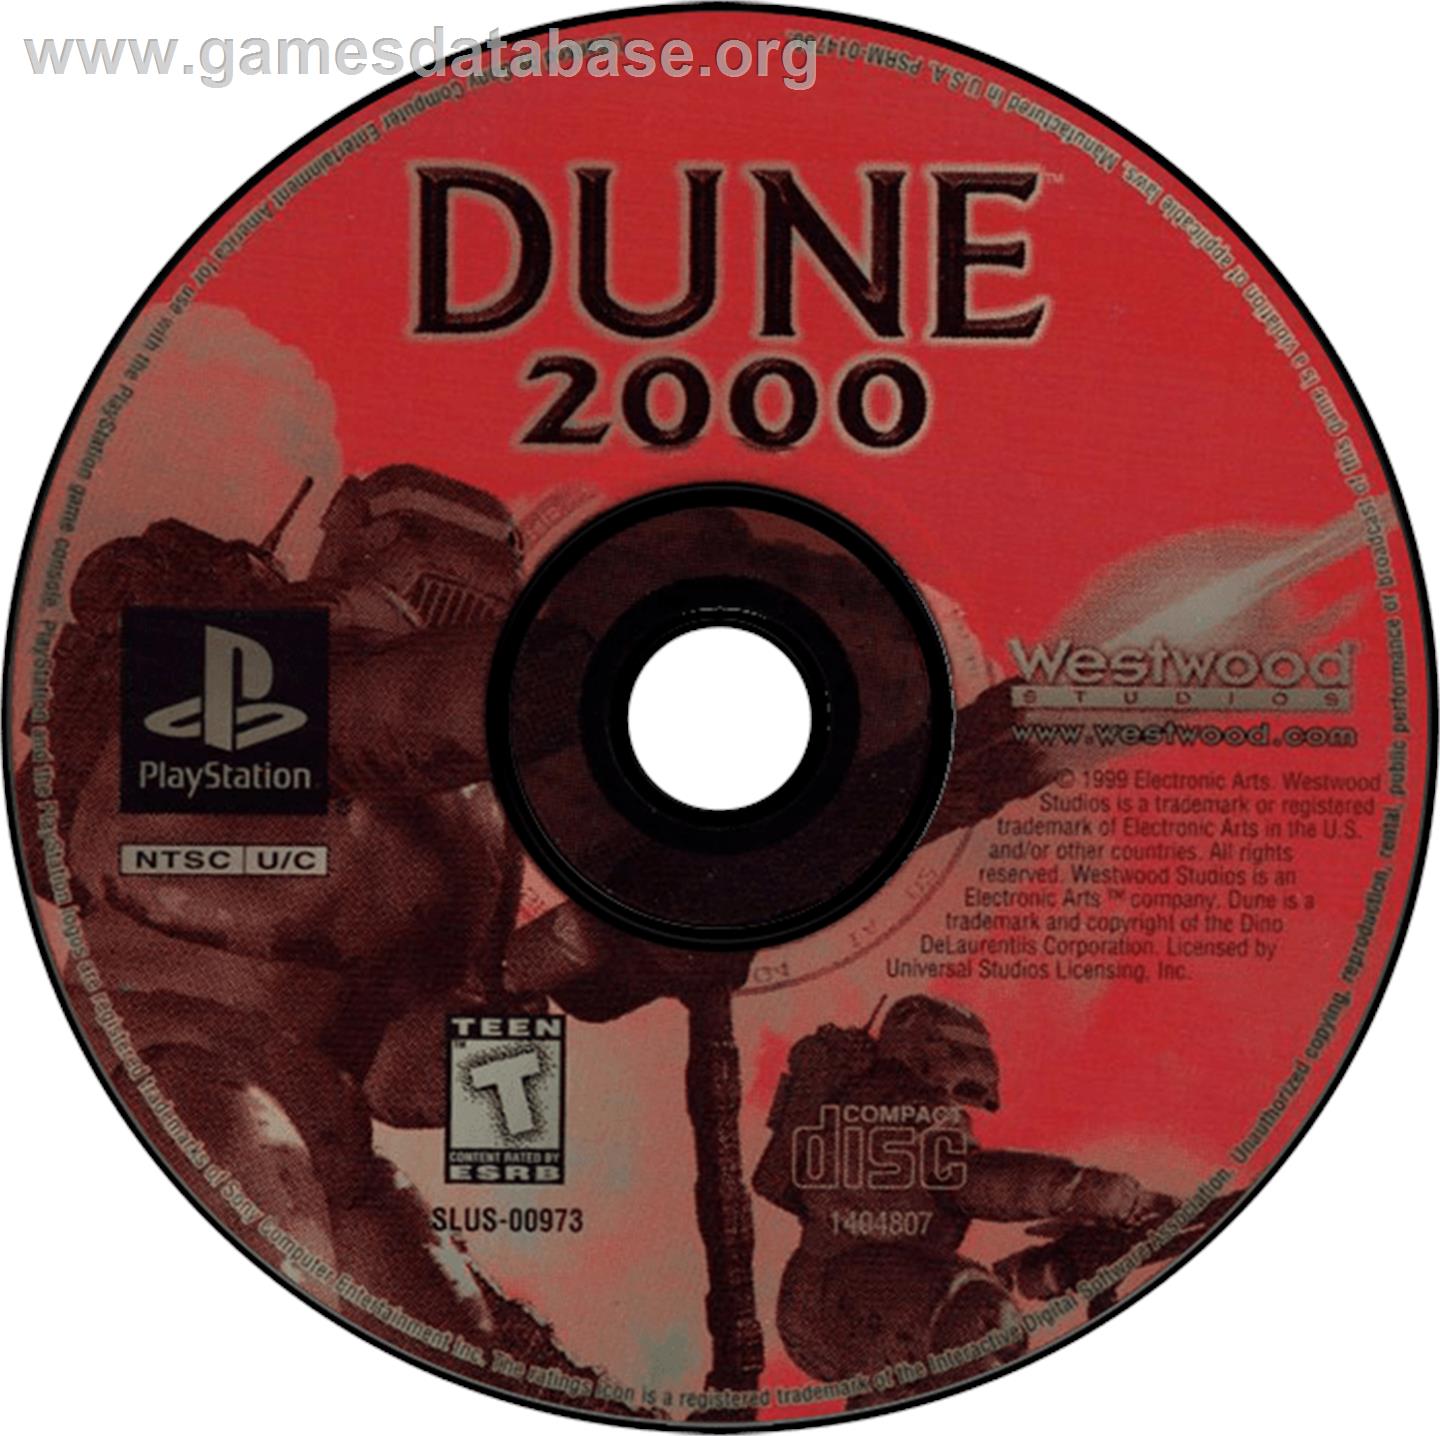 Dune 2000 - Sony Playstation - Artwork - Disc